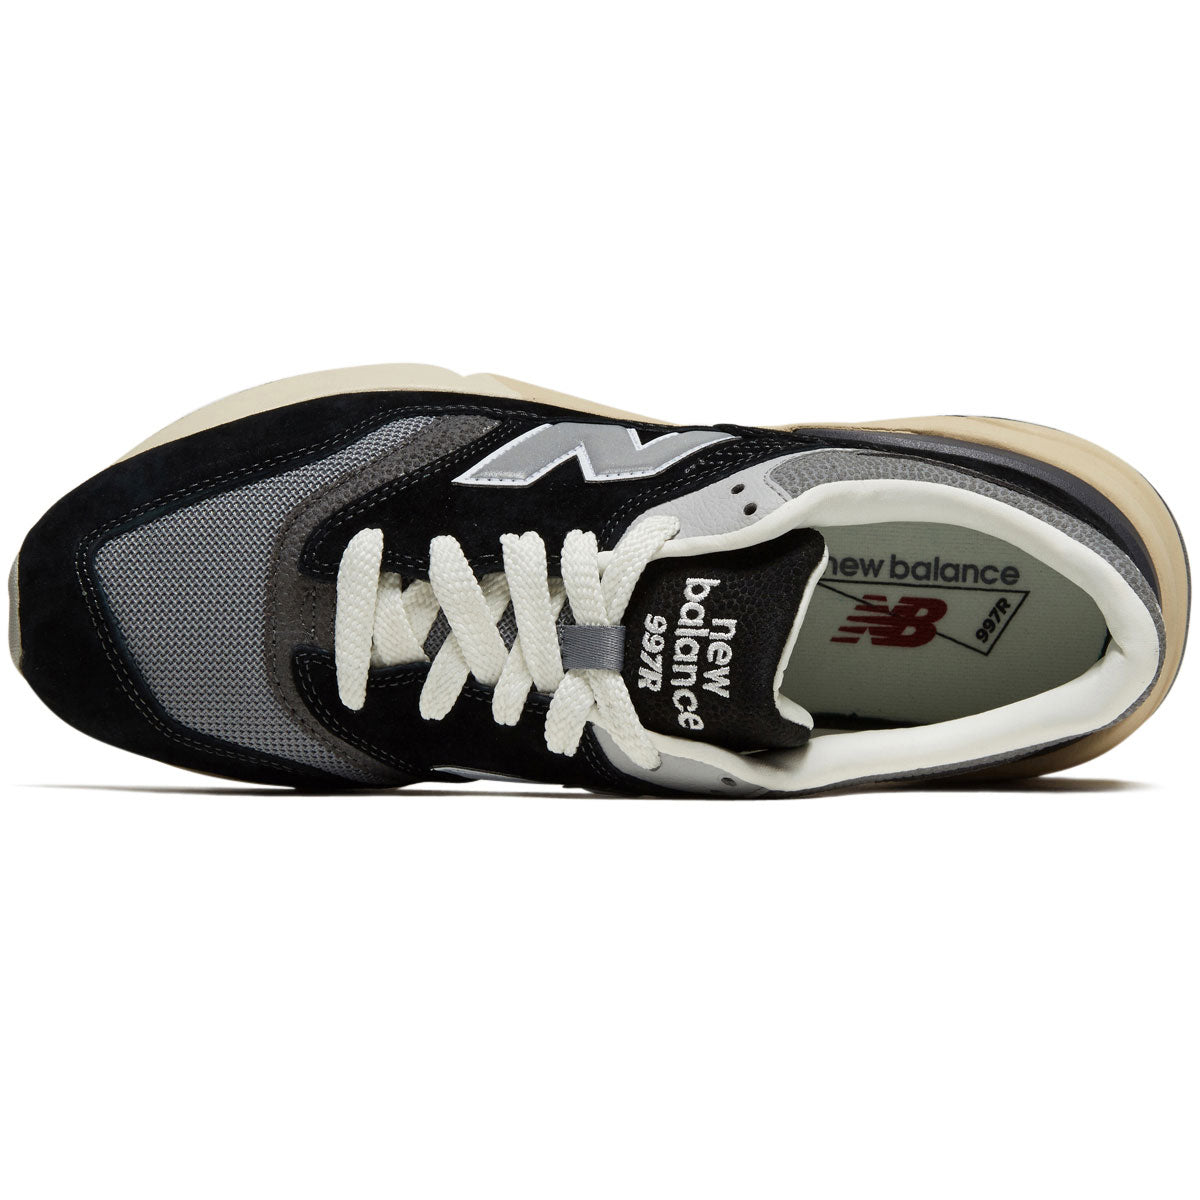 New Balance 997R Shoes - Black/Shadow Grey image 3